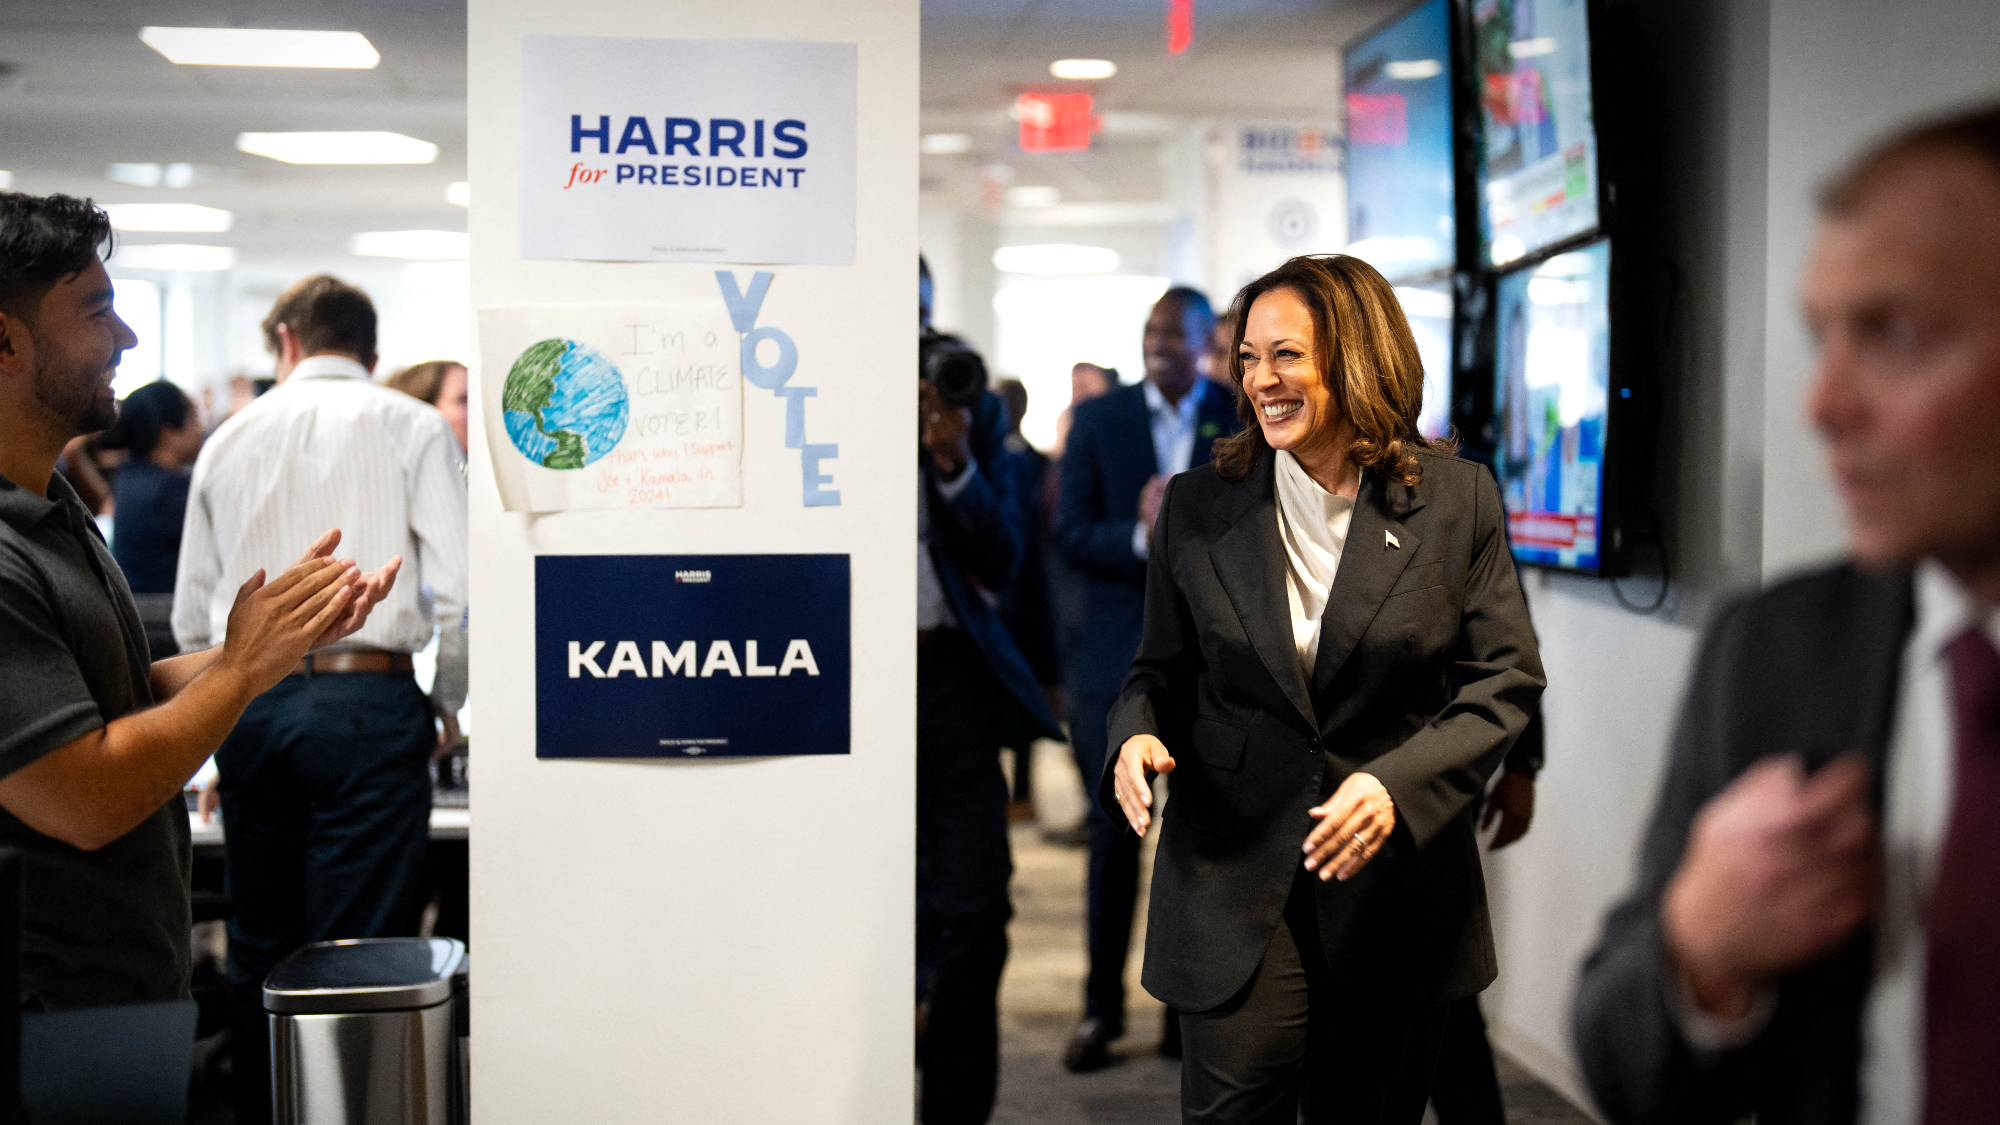  Harris clinches Democratic support, raises $81M 